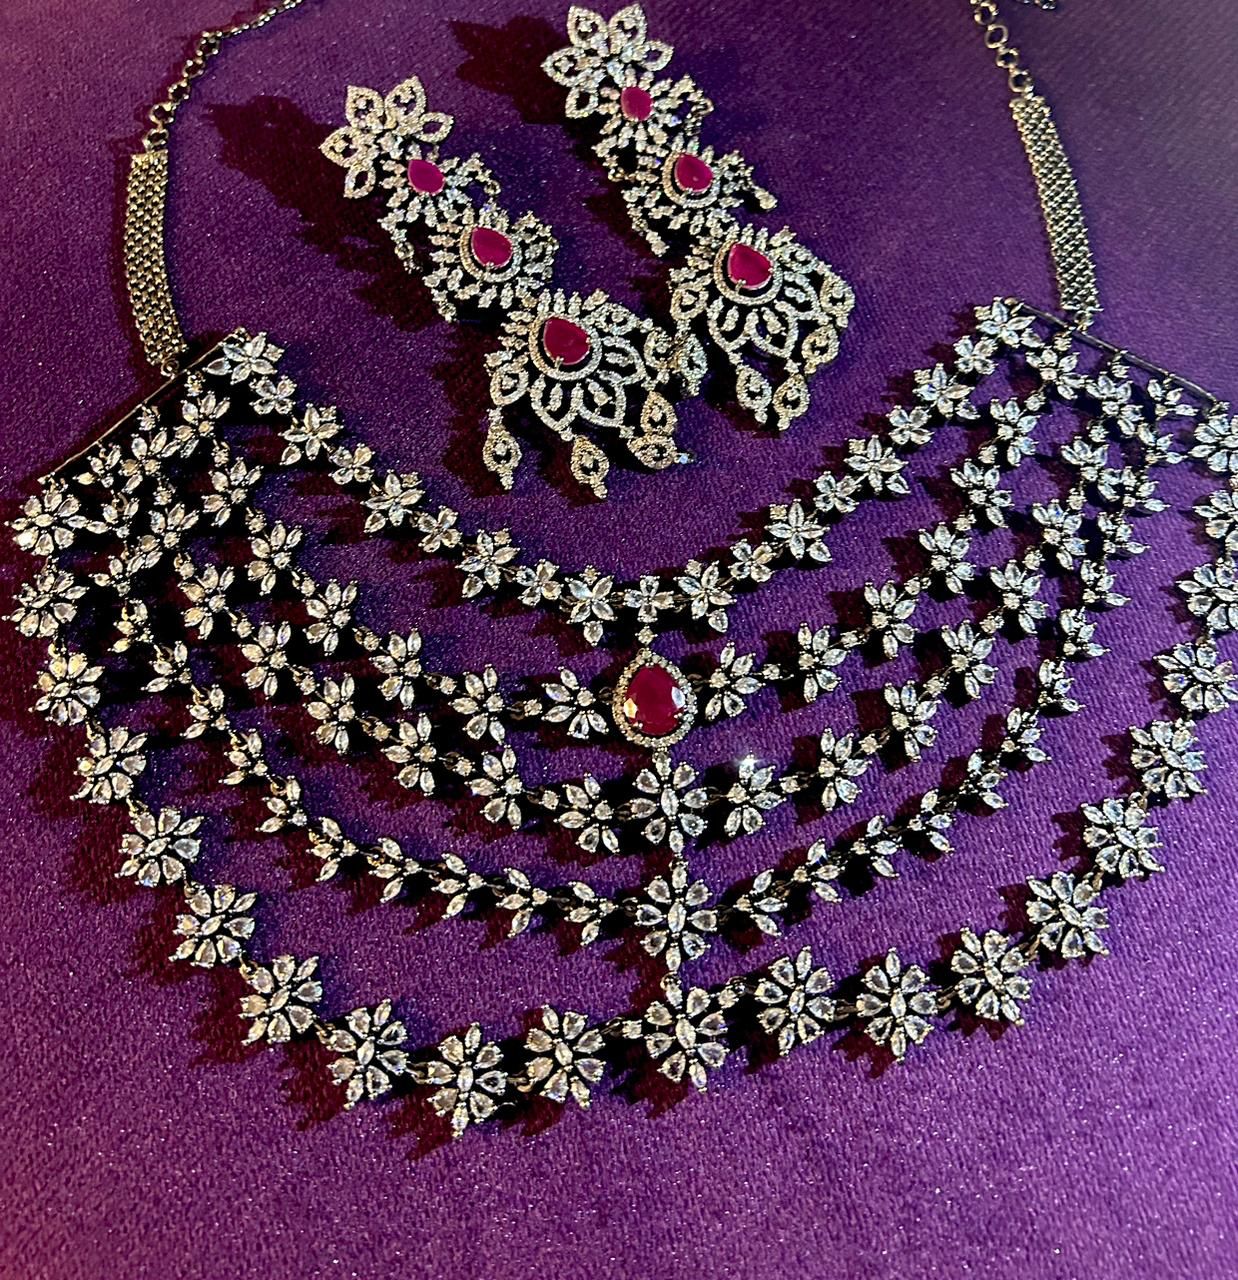 Premium Quality American Diamond Necklace set with Premium Earrings jewellery